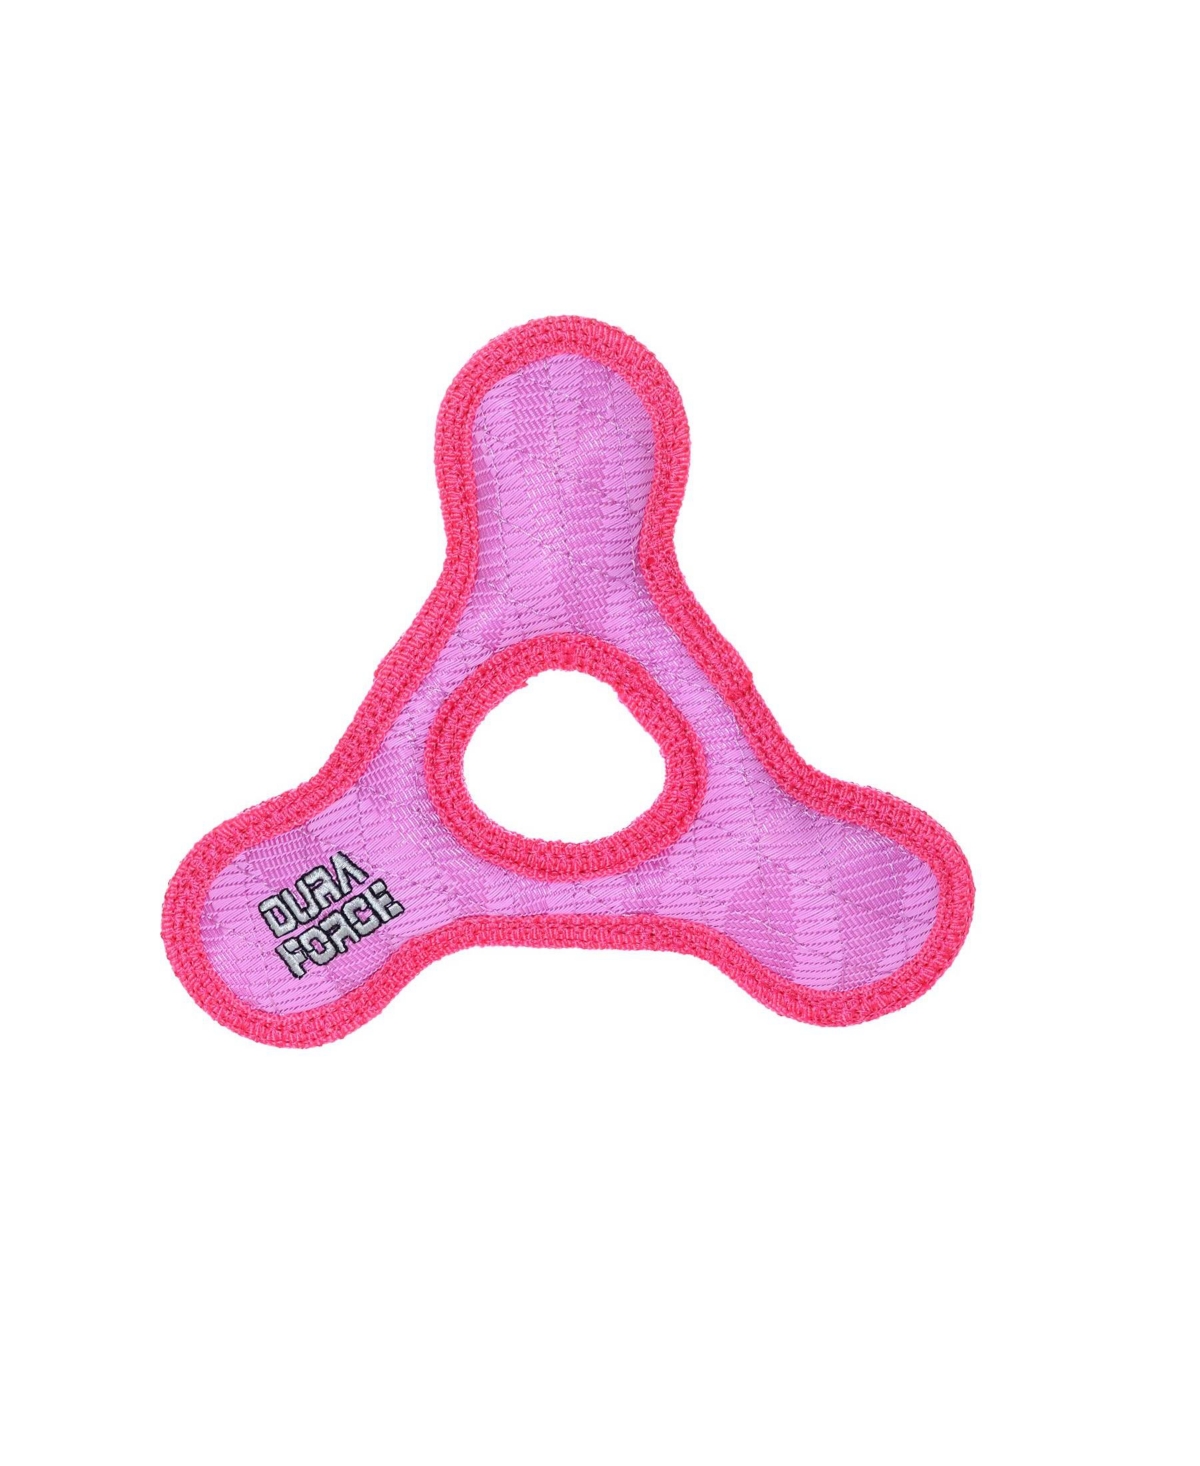 Jr TriangleRing Tiger Pink-Pink, Dog Toy - Bright Pink